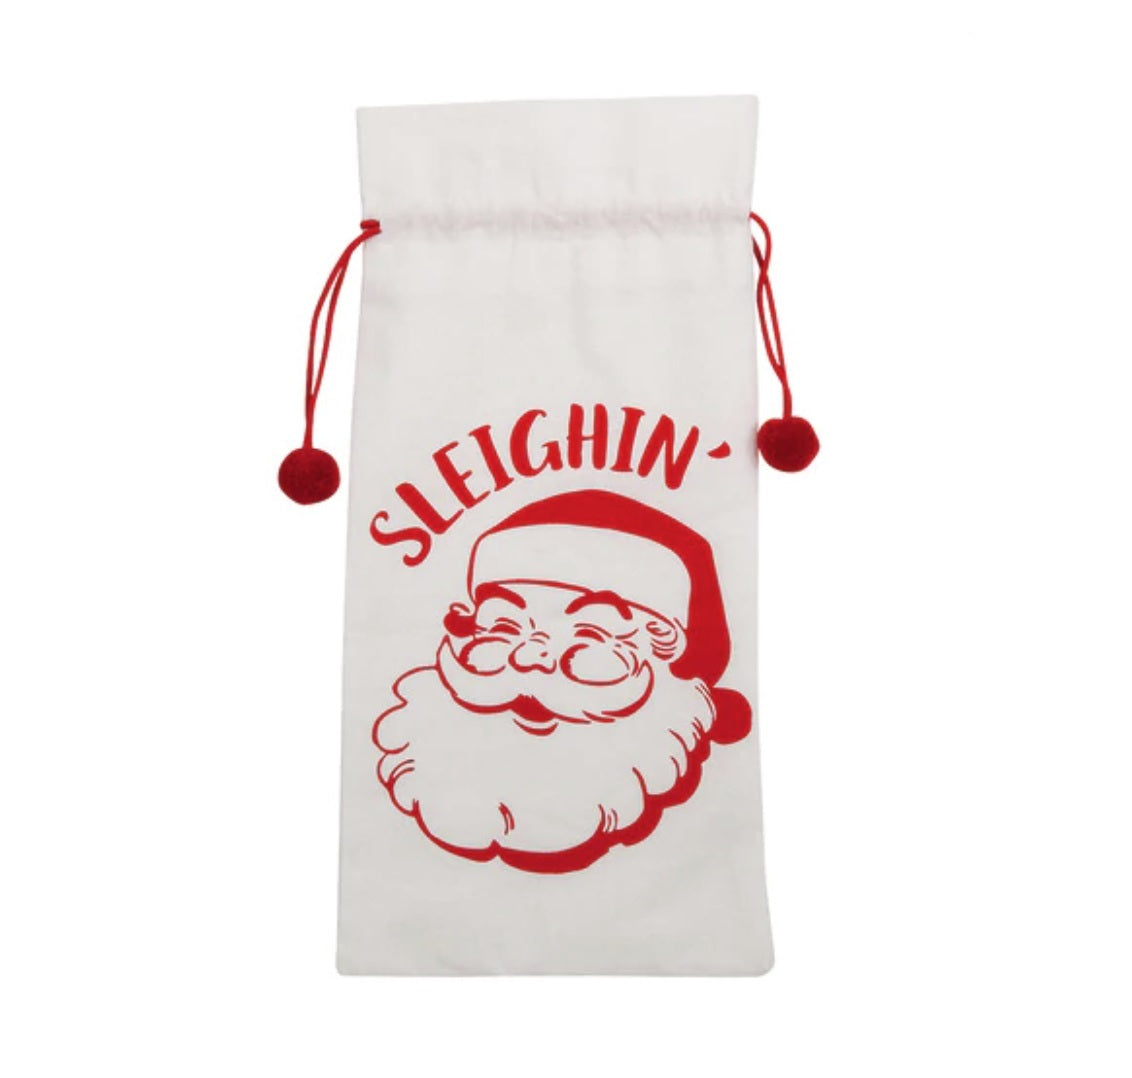 Cloth "Sleighin" Wine Bottle Bag